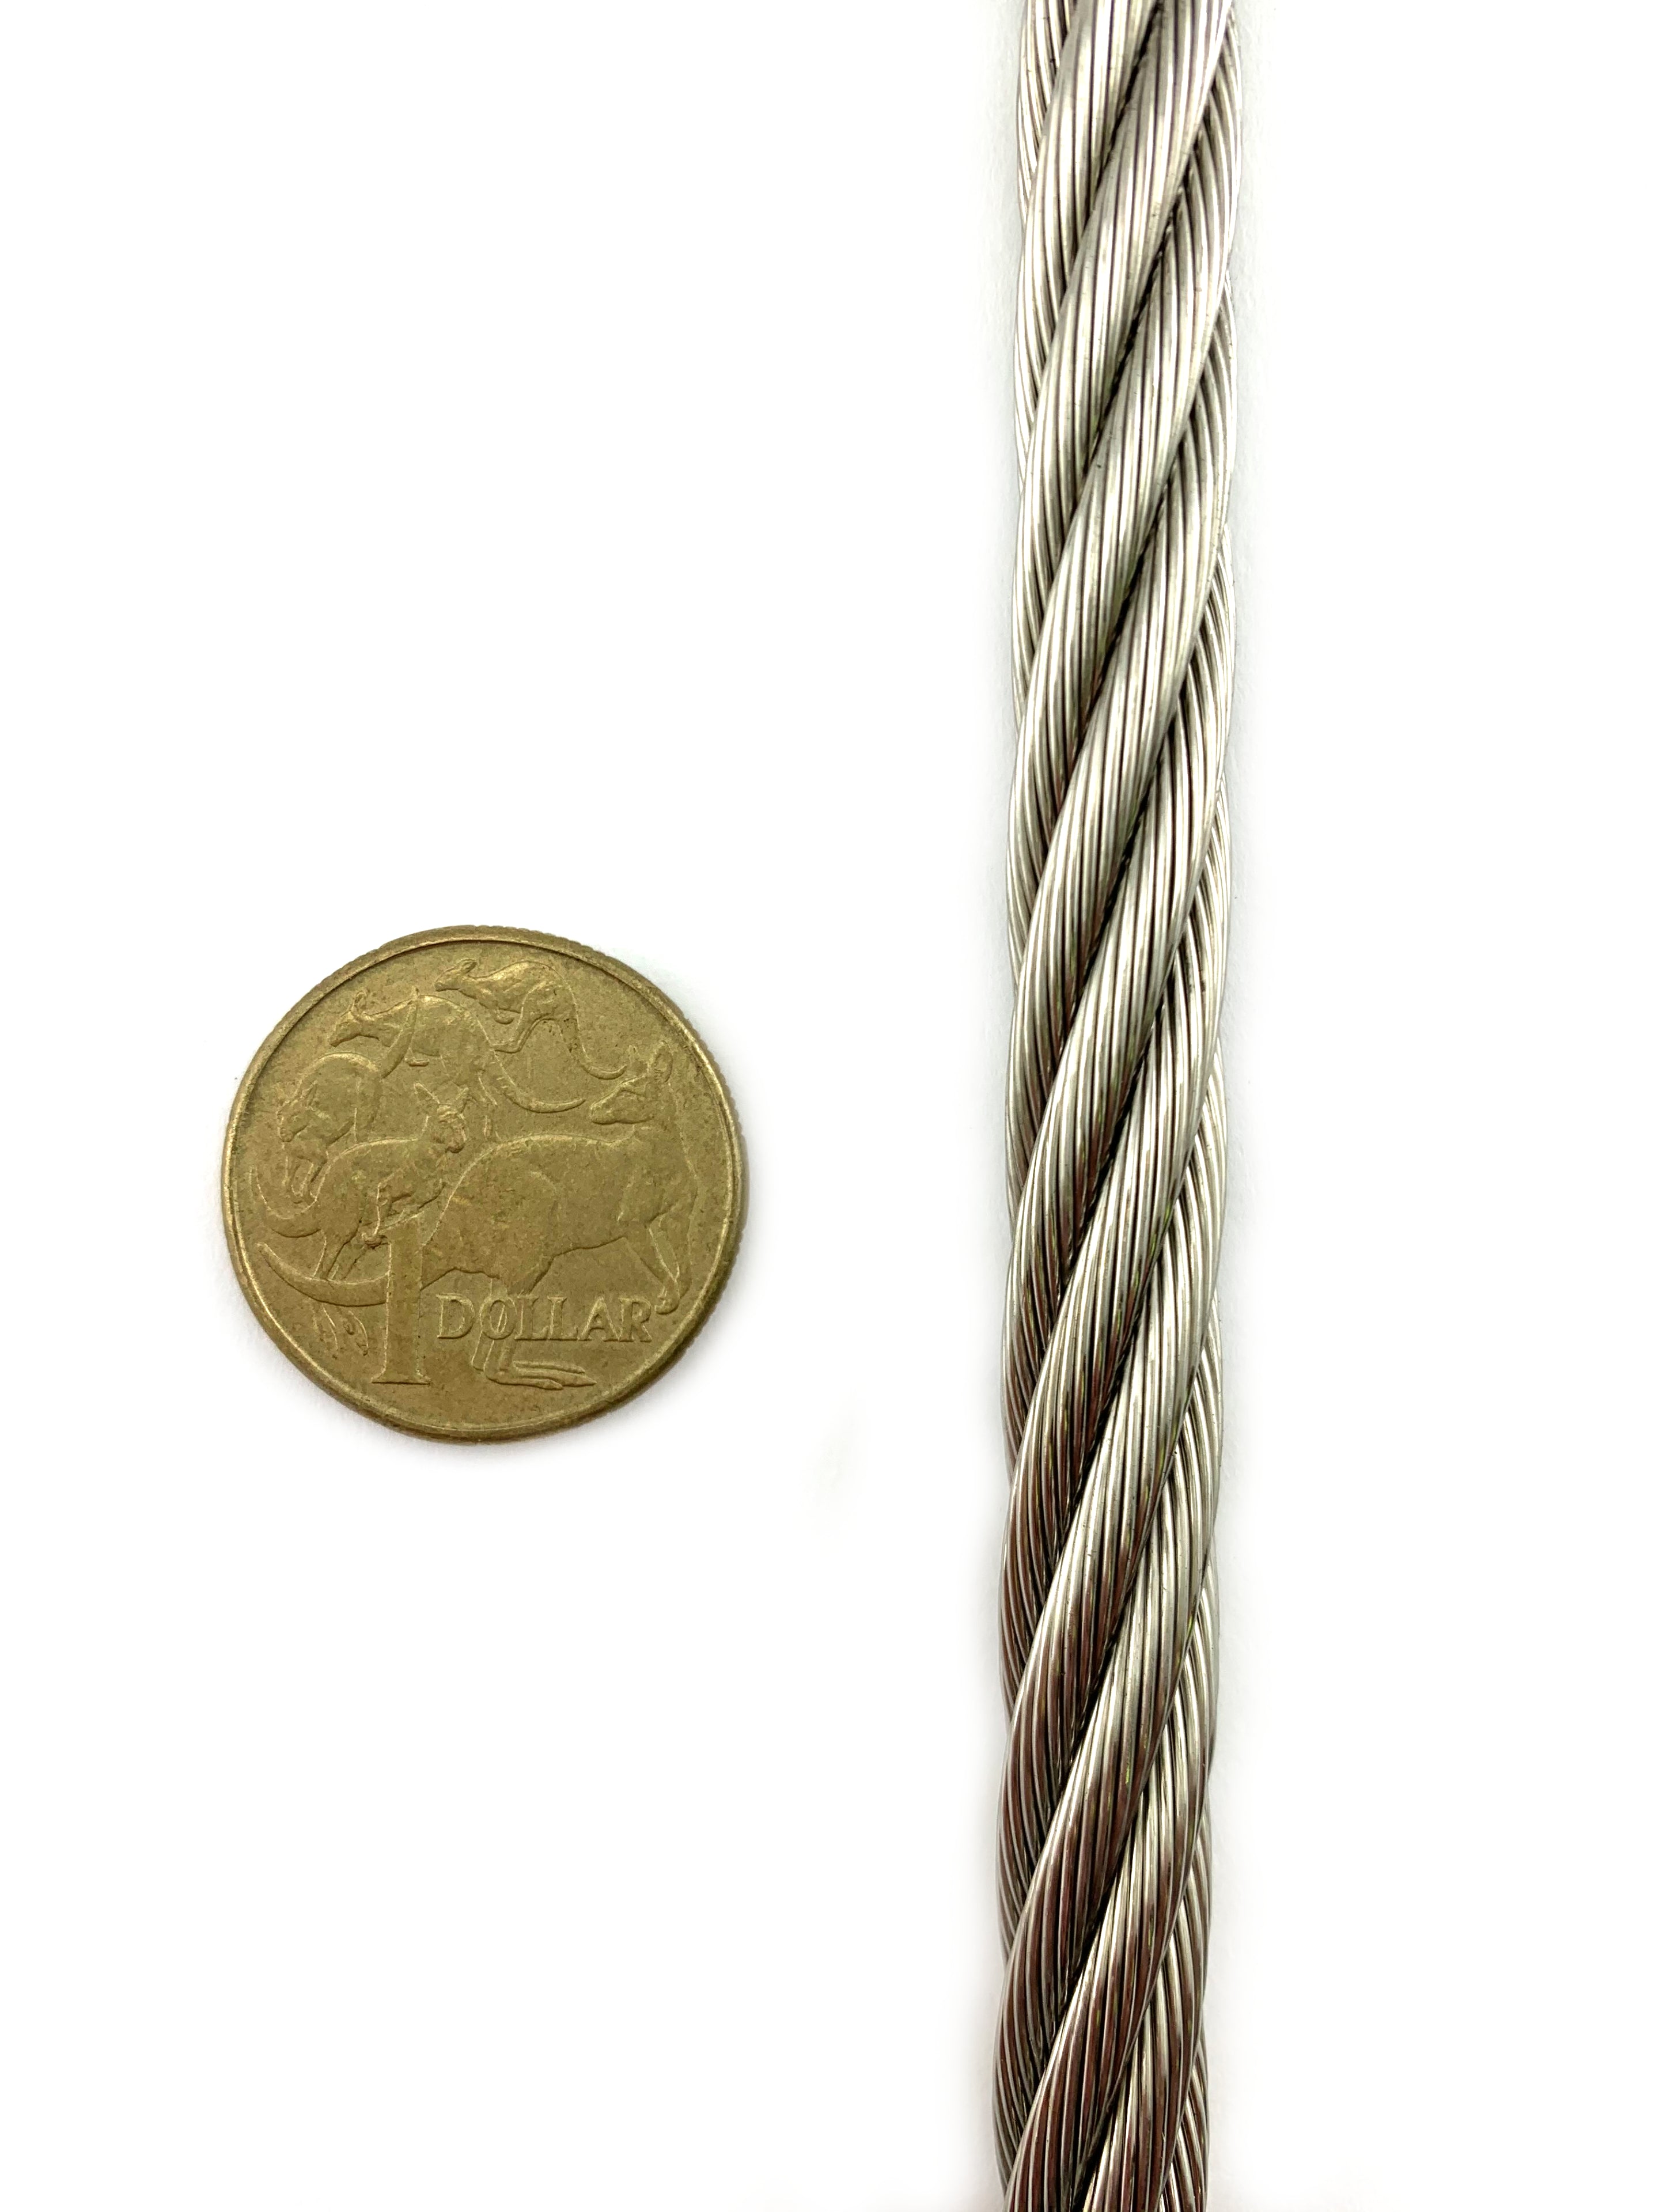 Stainless Steel Wire Rope, size 10mm. 10-metre reel. Australia